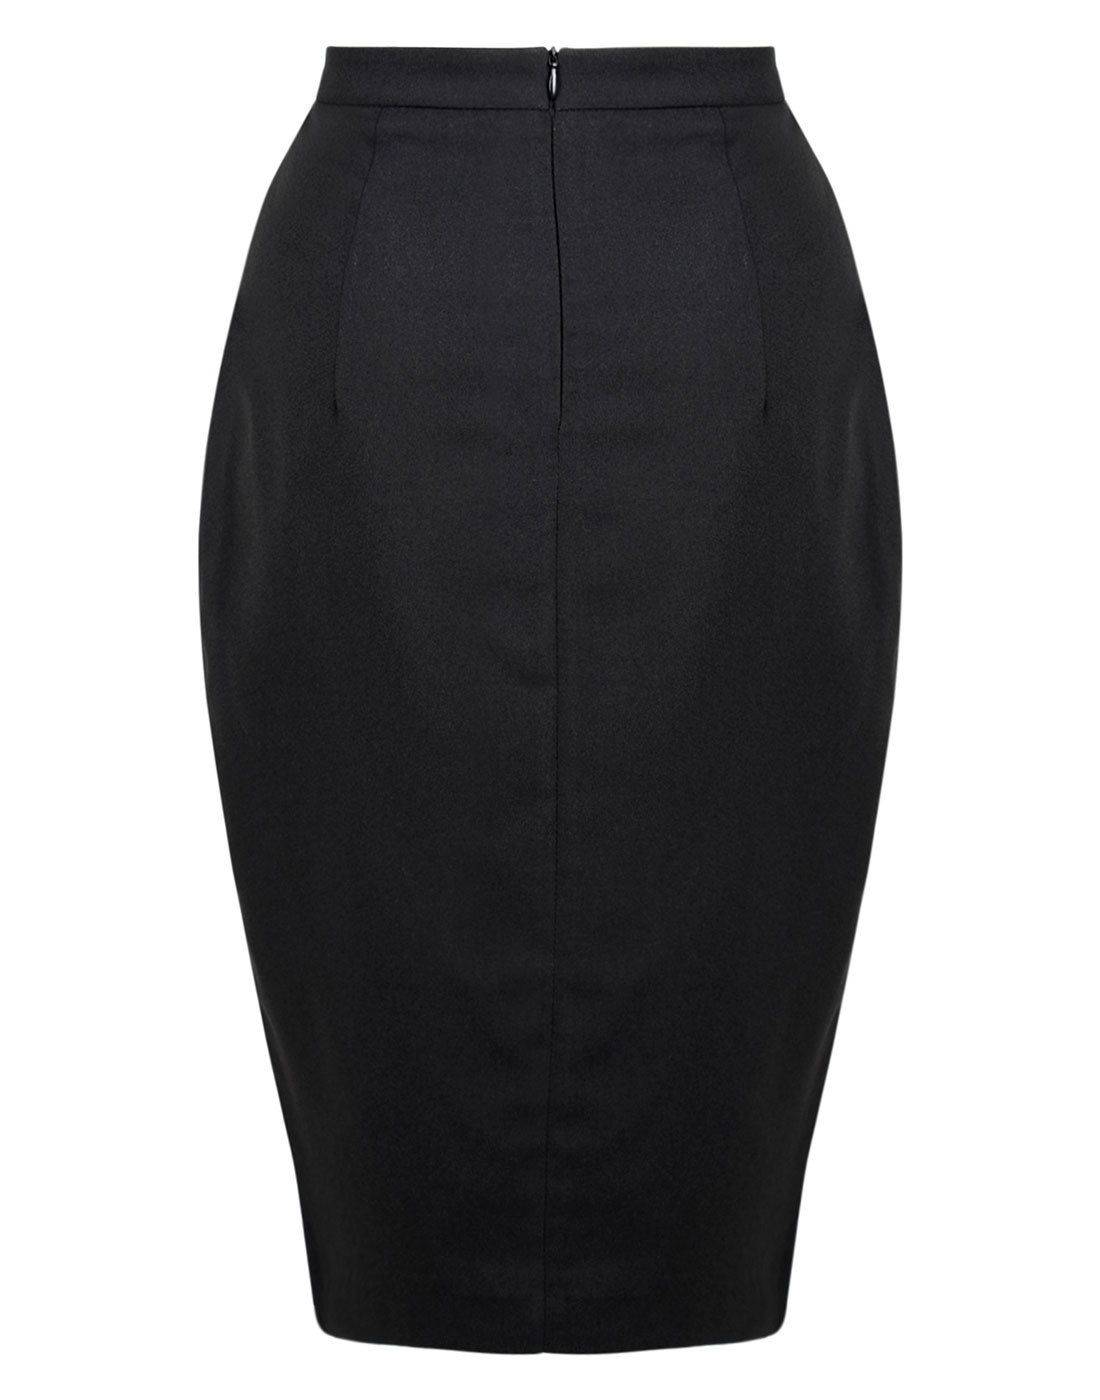 FEVER Ashcott Retro 50s Vintage Style Fitted Pencil Skirt Black